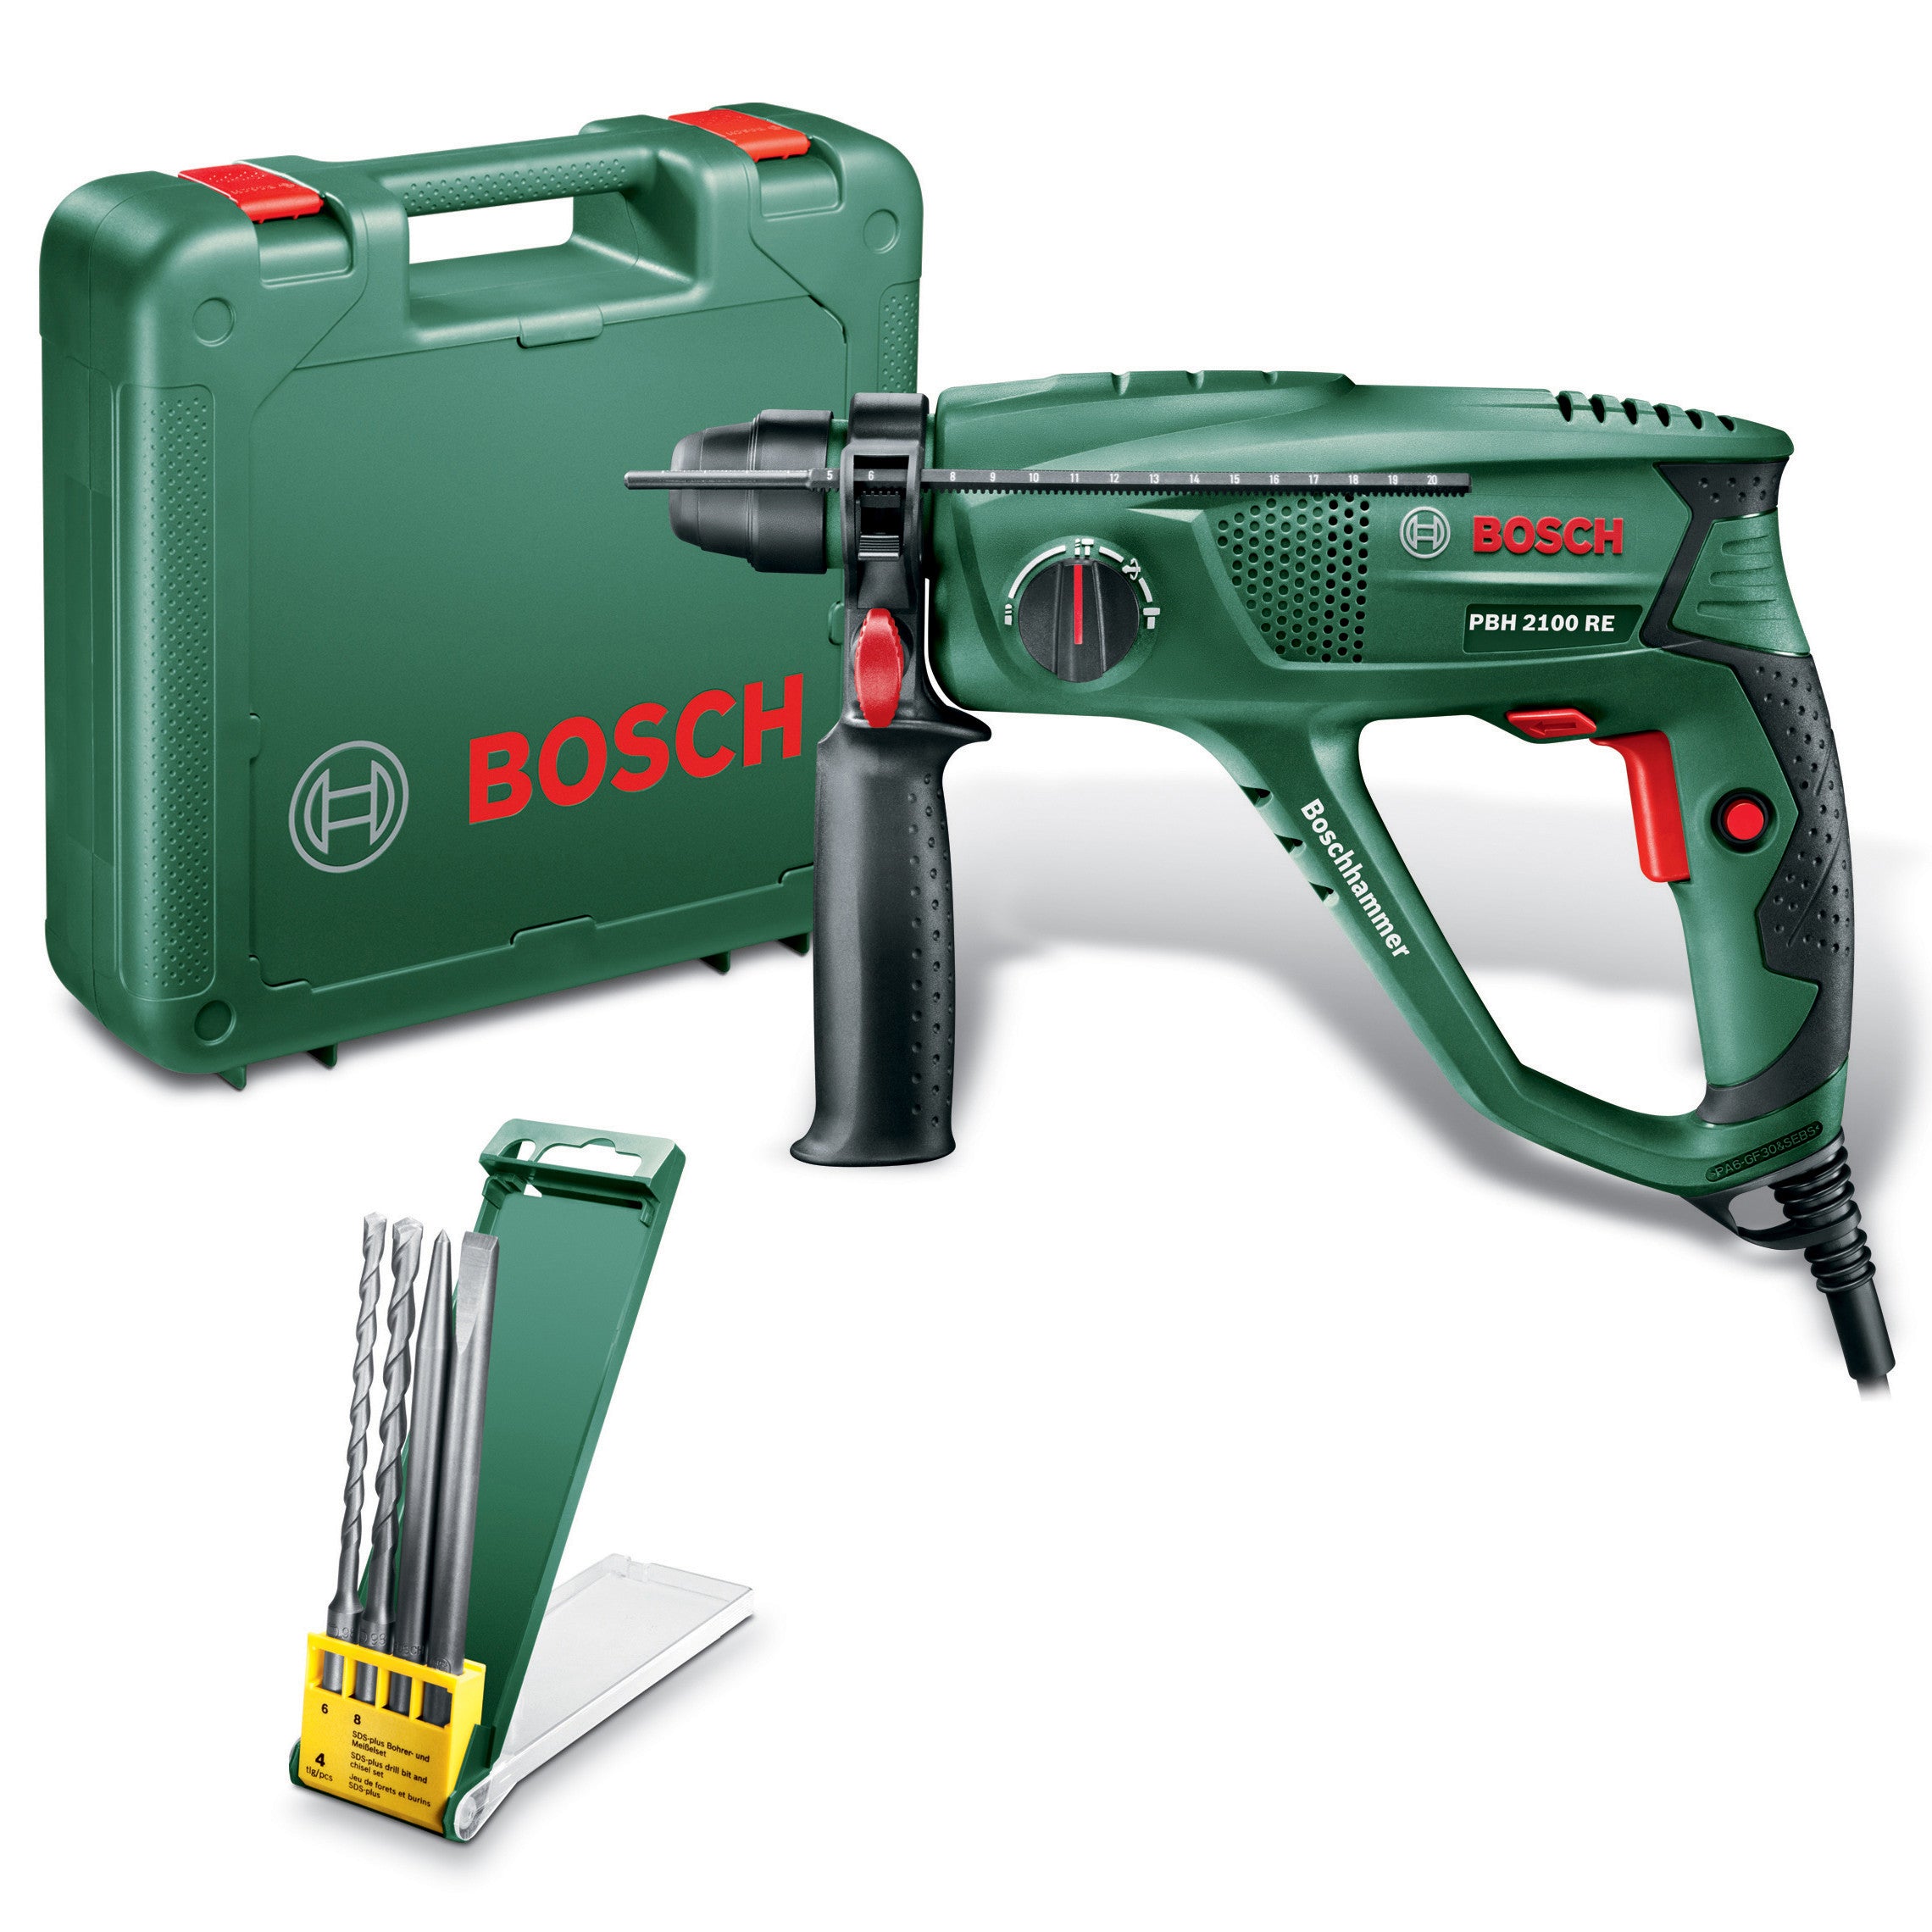 Bosch-v tassellatore 550w pbh 2100 re + set punte